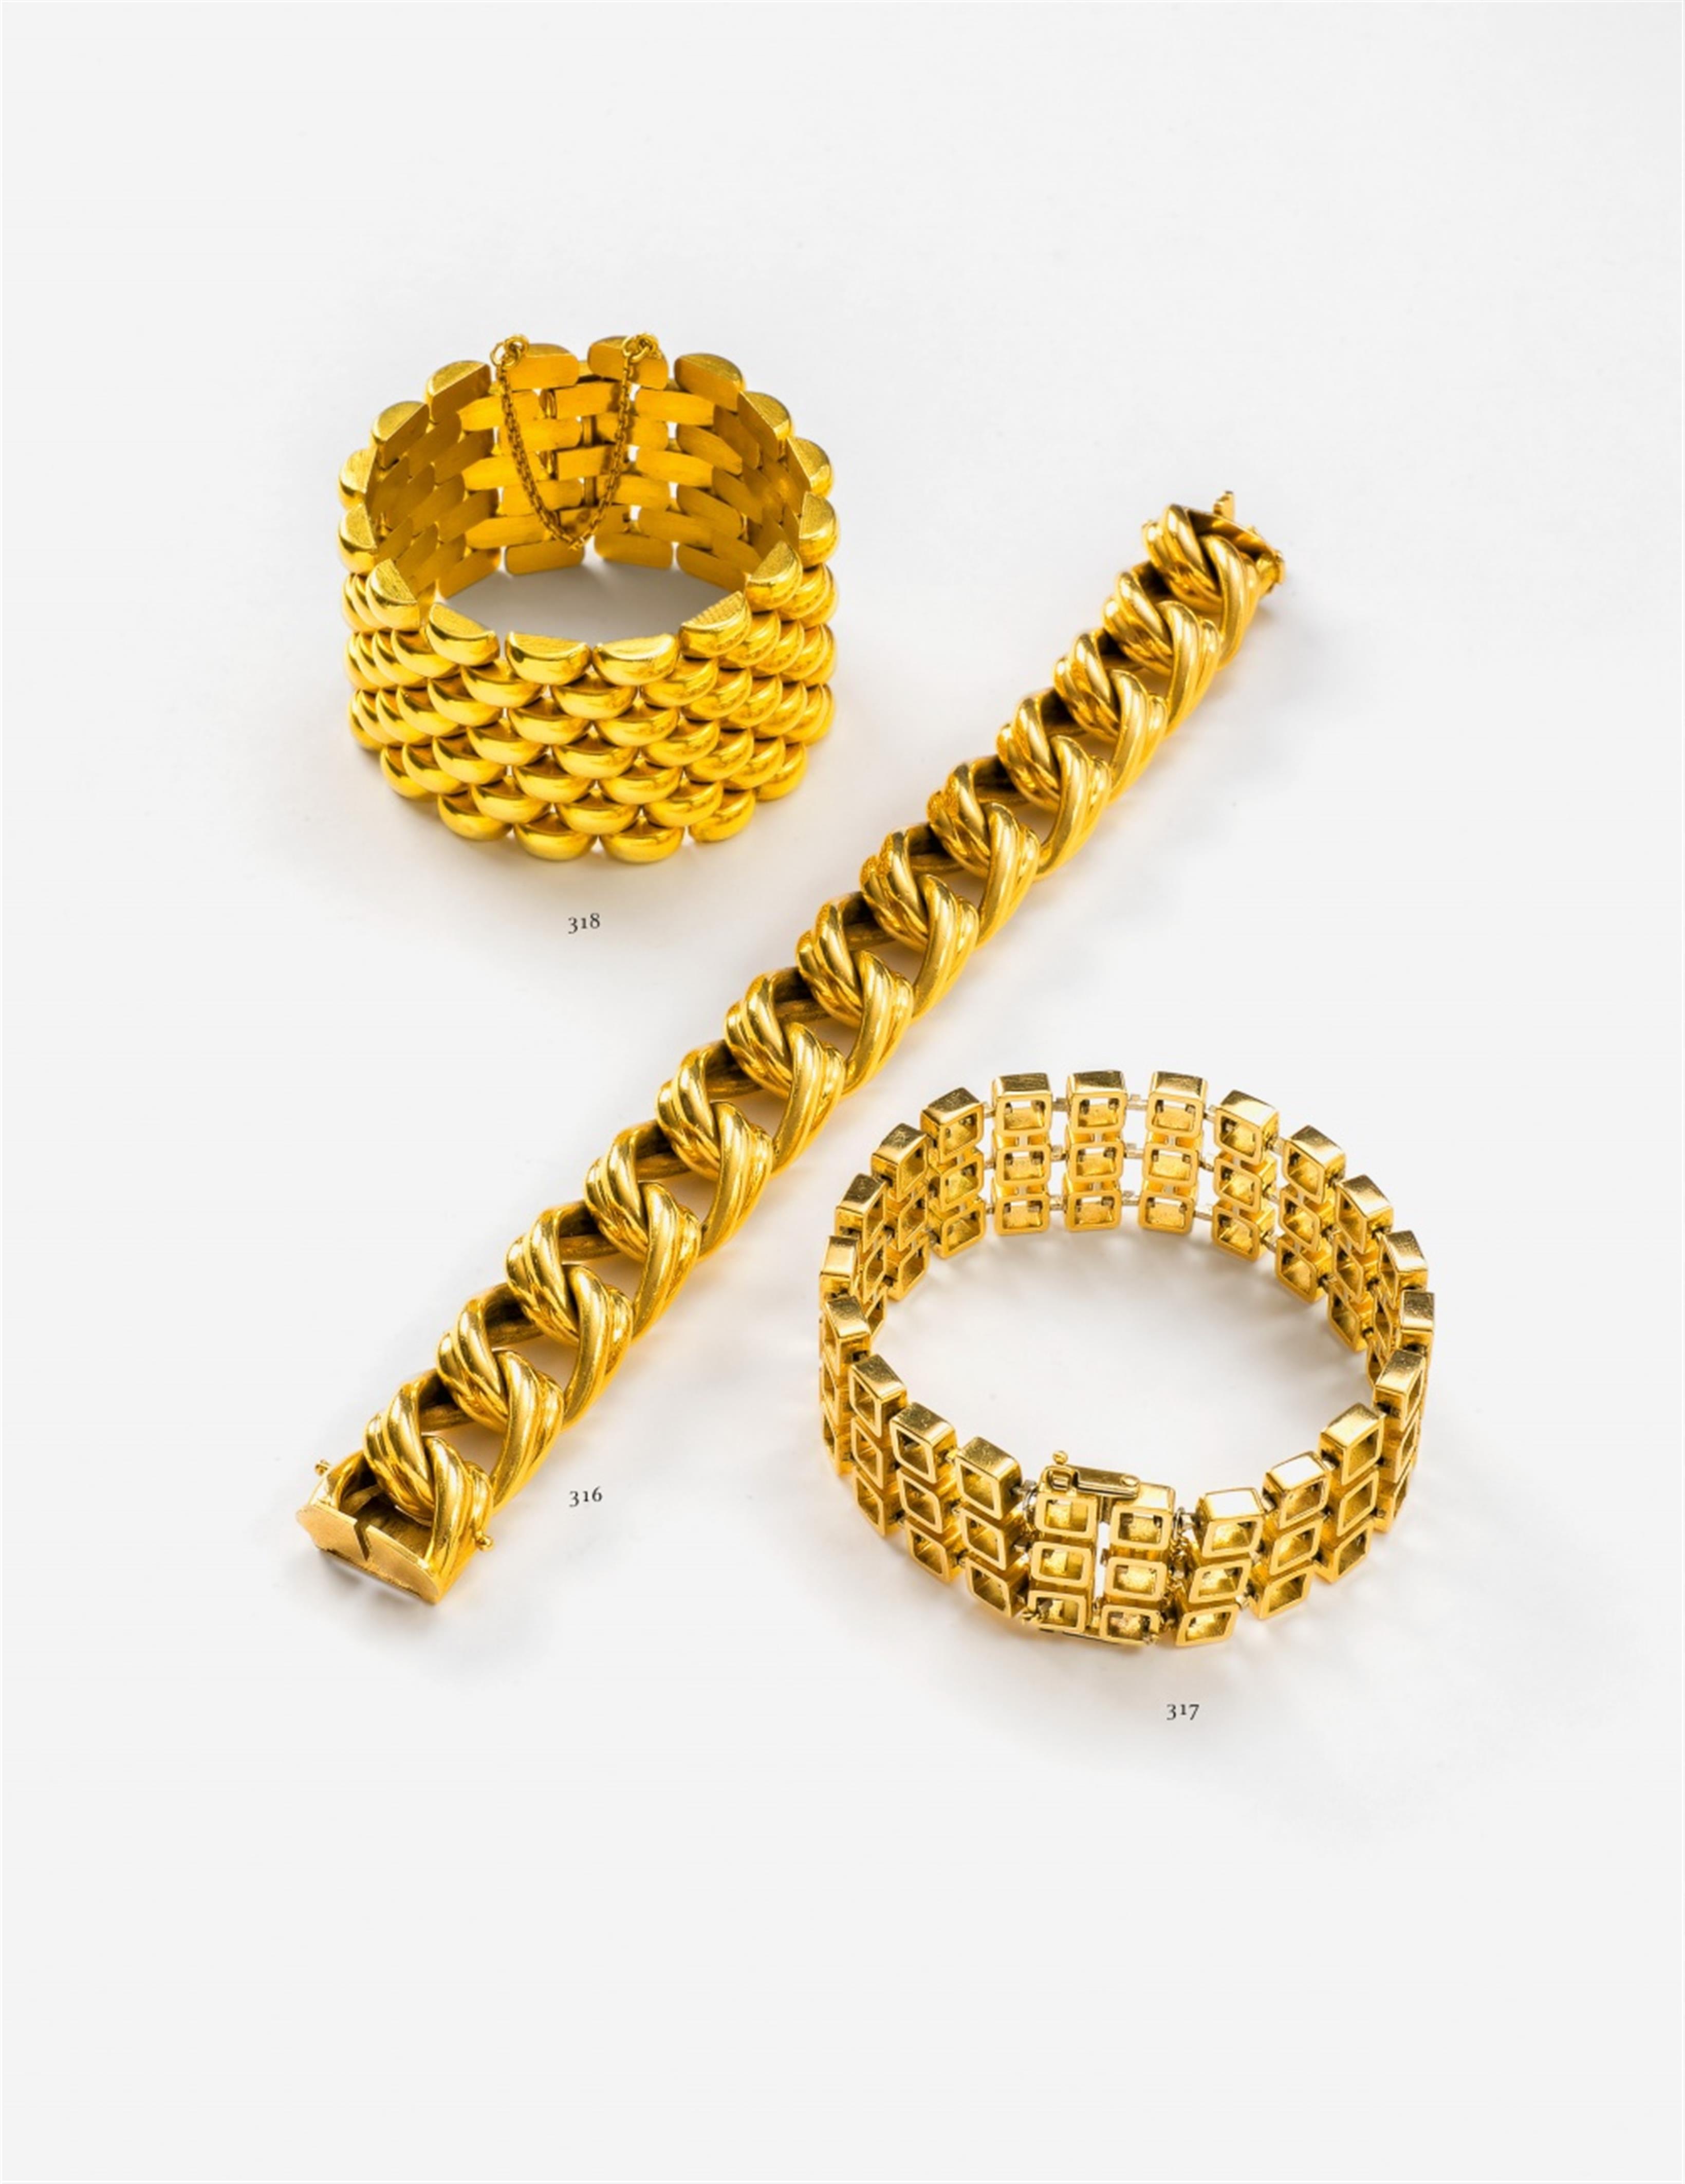 A 21k gold bangle - image-1